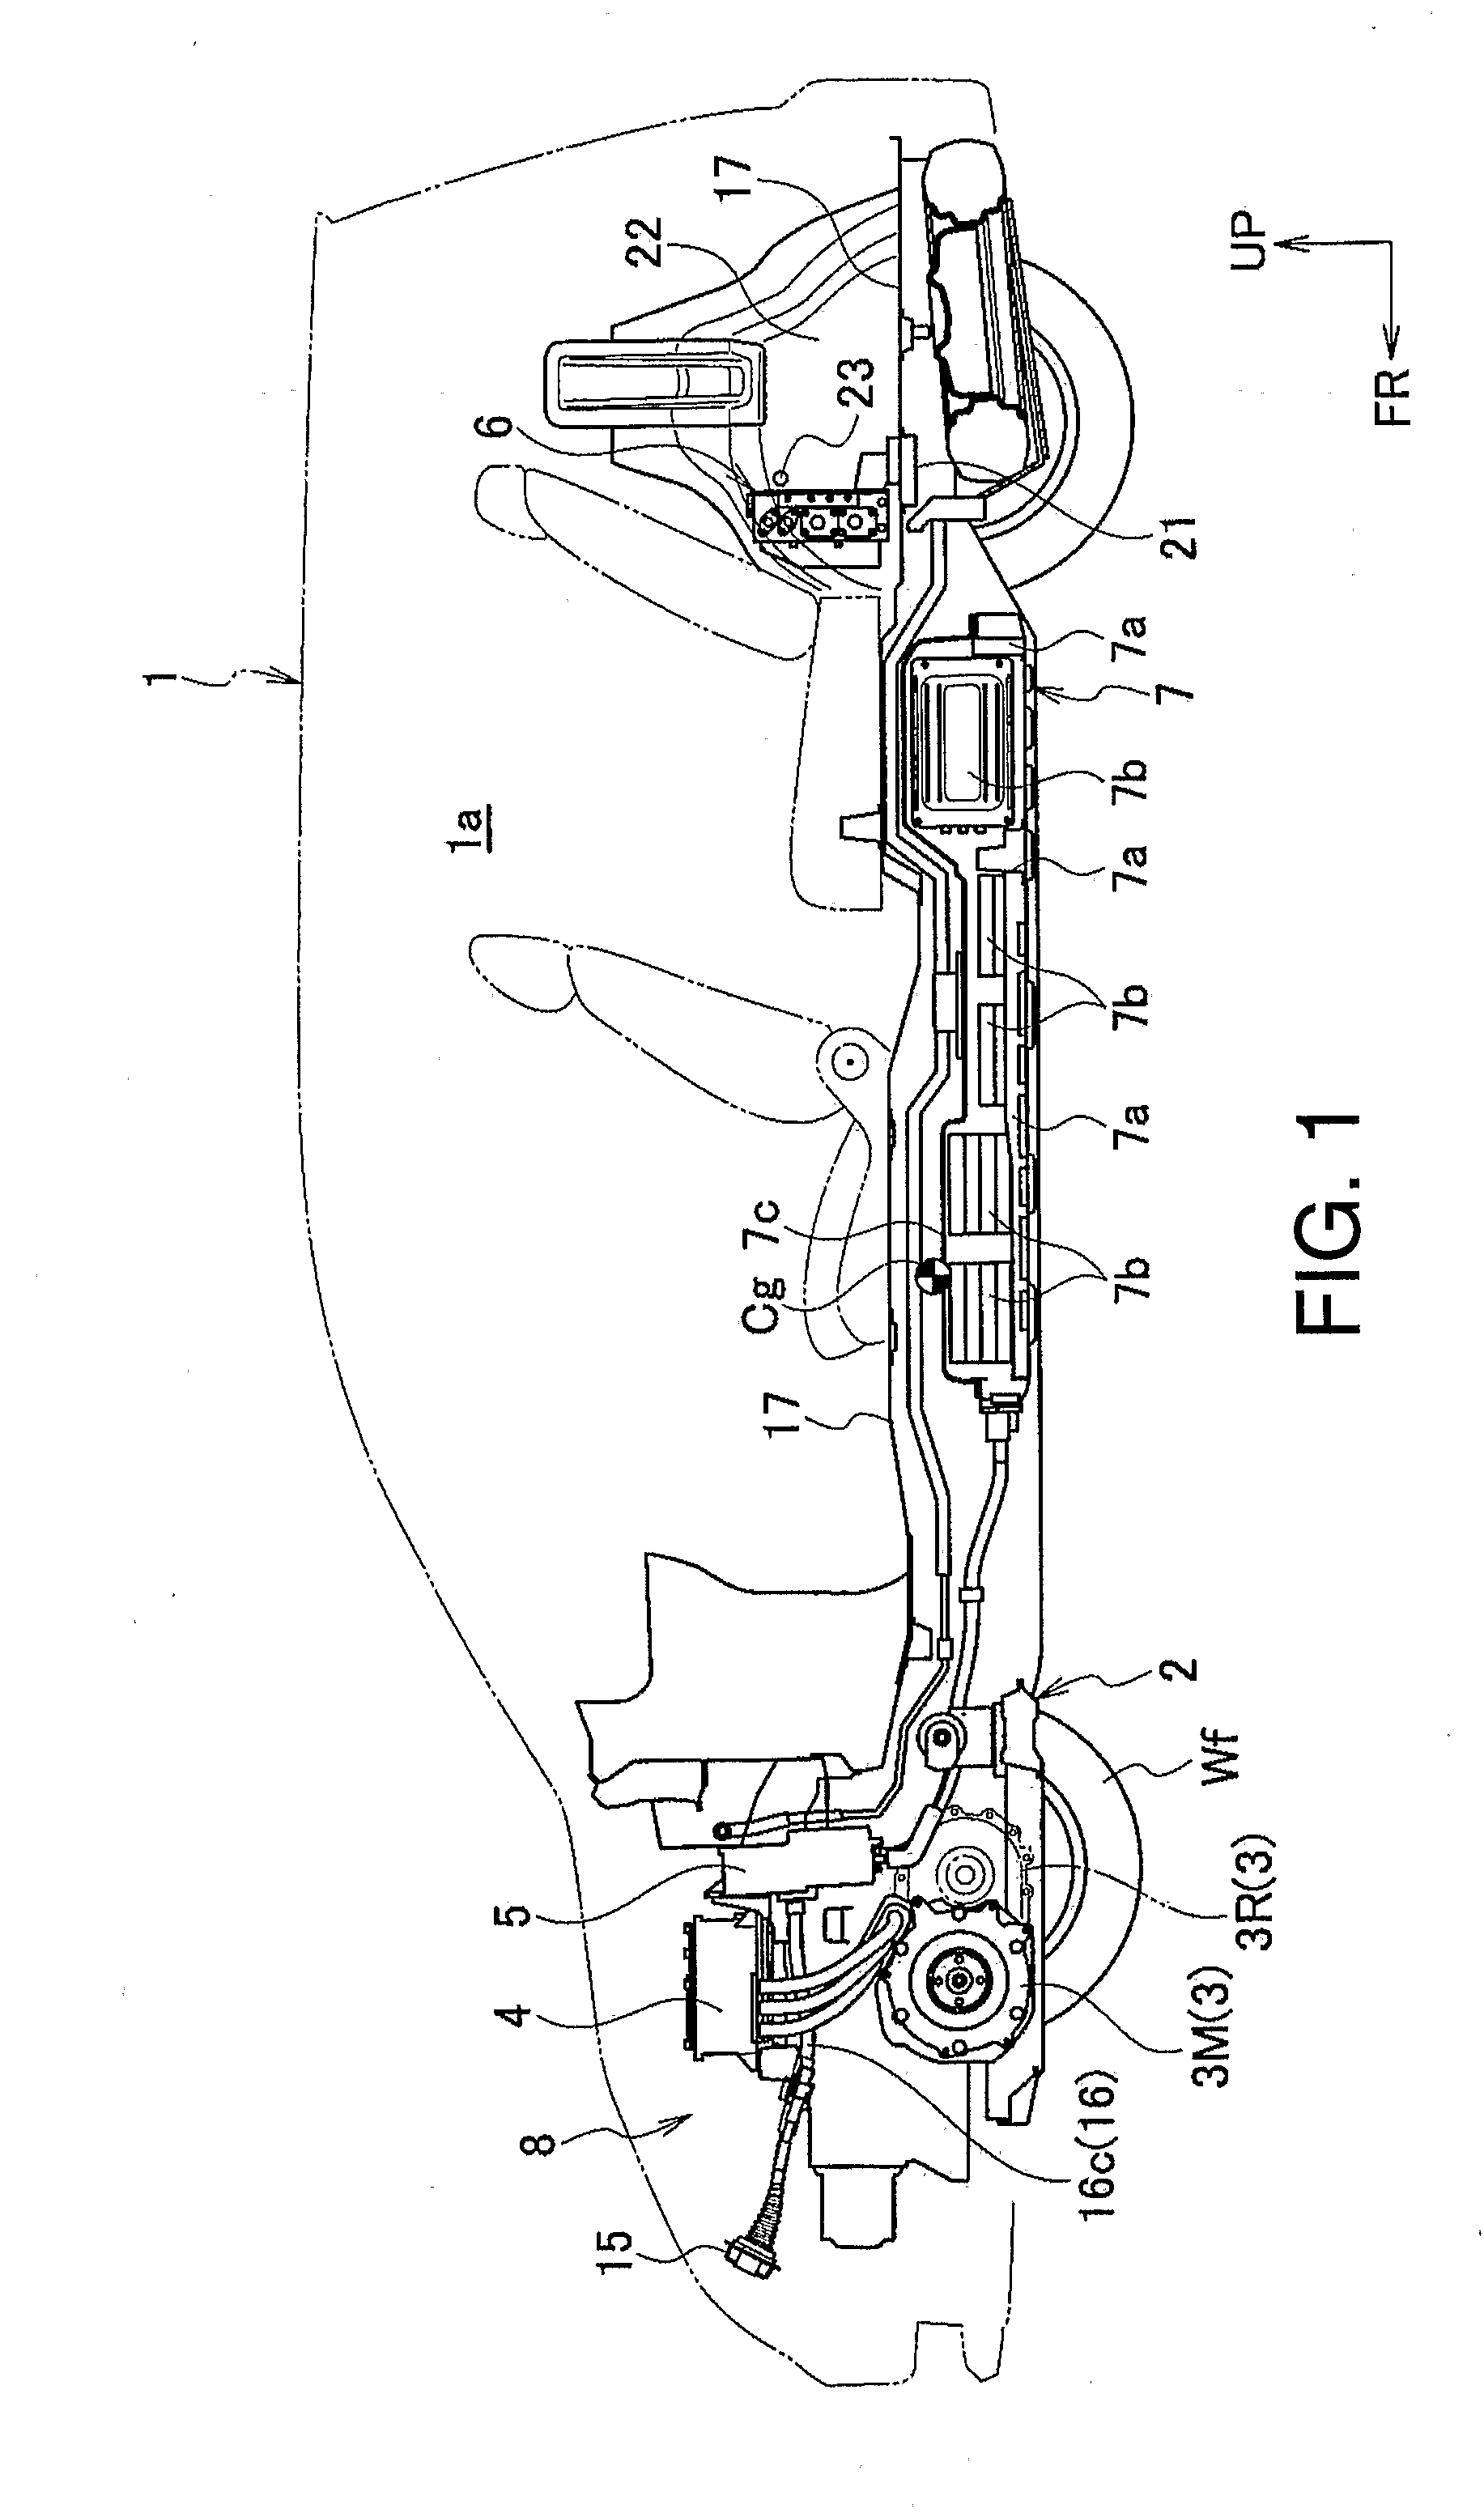 Vehicle component mounting arrangement